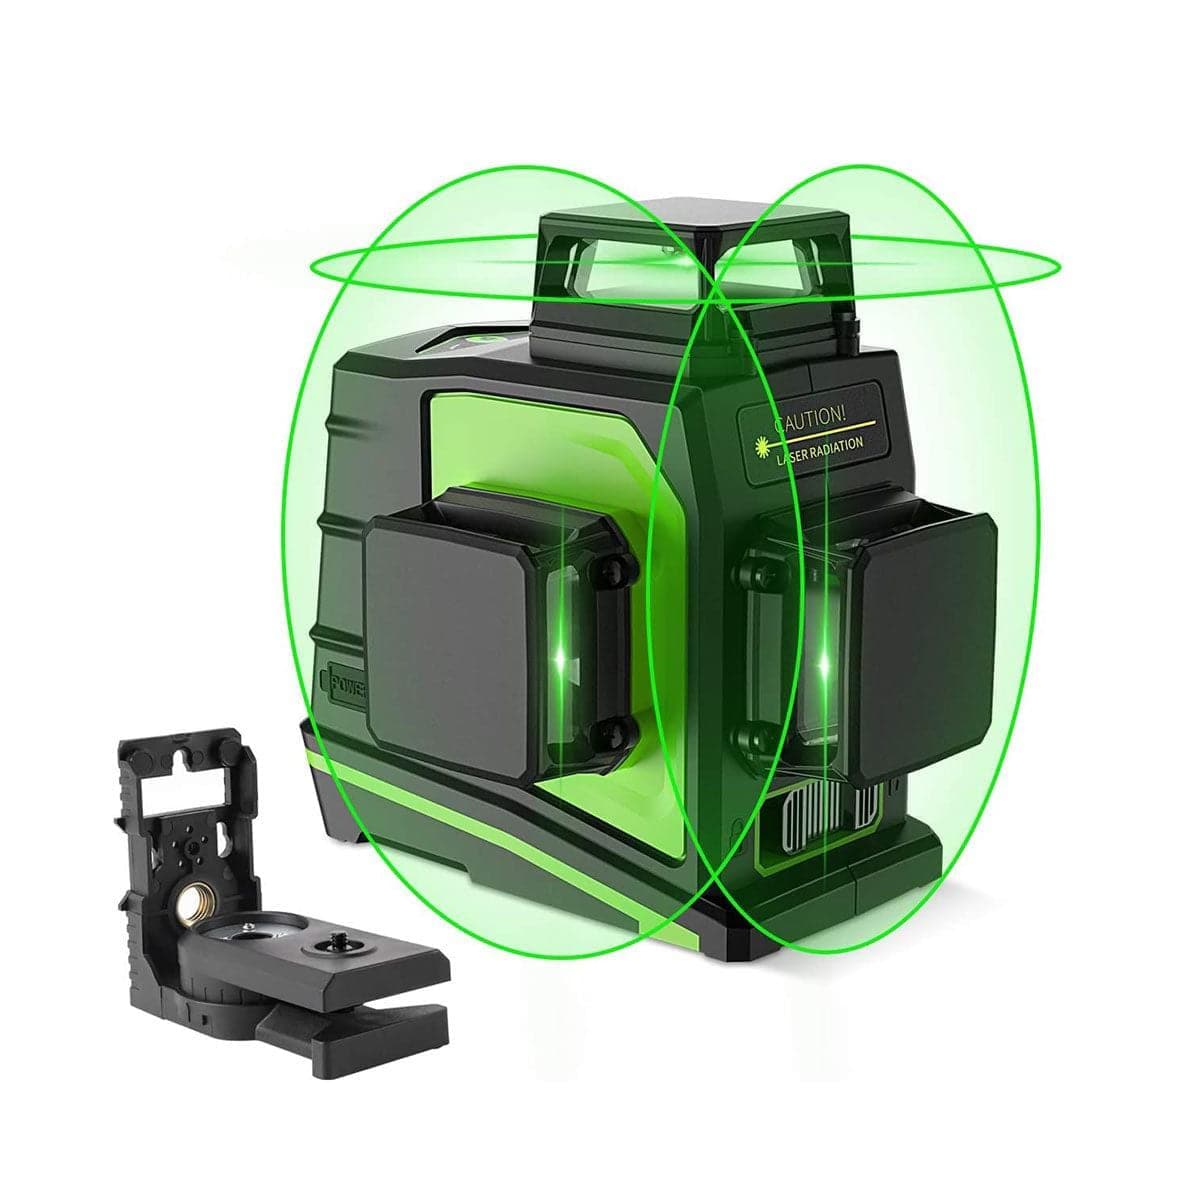 Huepar GF360G - 3D Green Beam Self-Leveling Laser Level with Magnetic  Pivoting Base